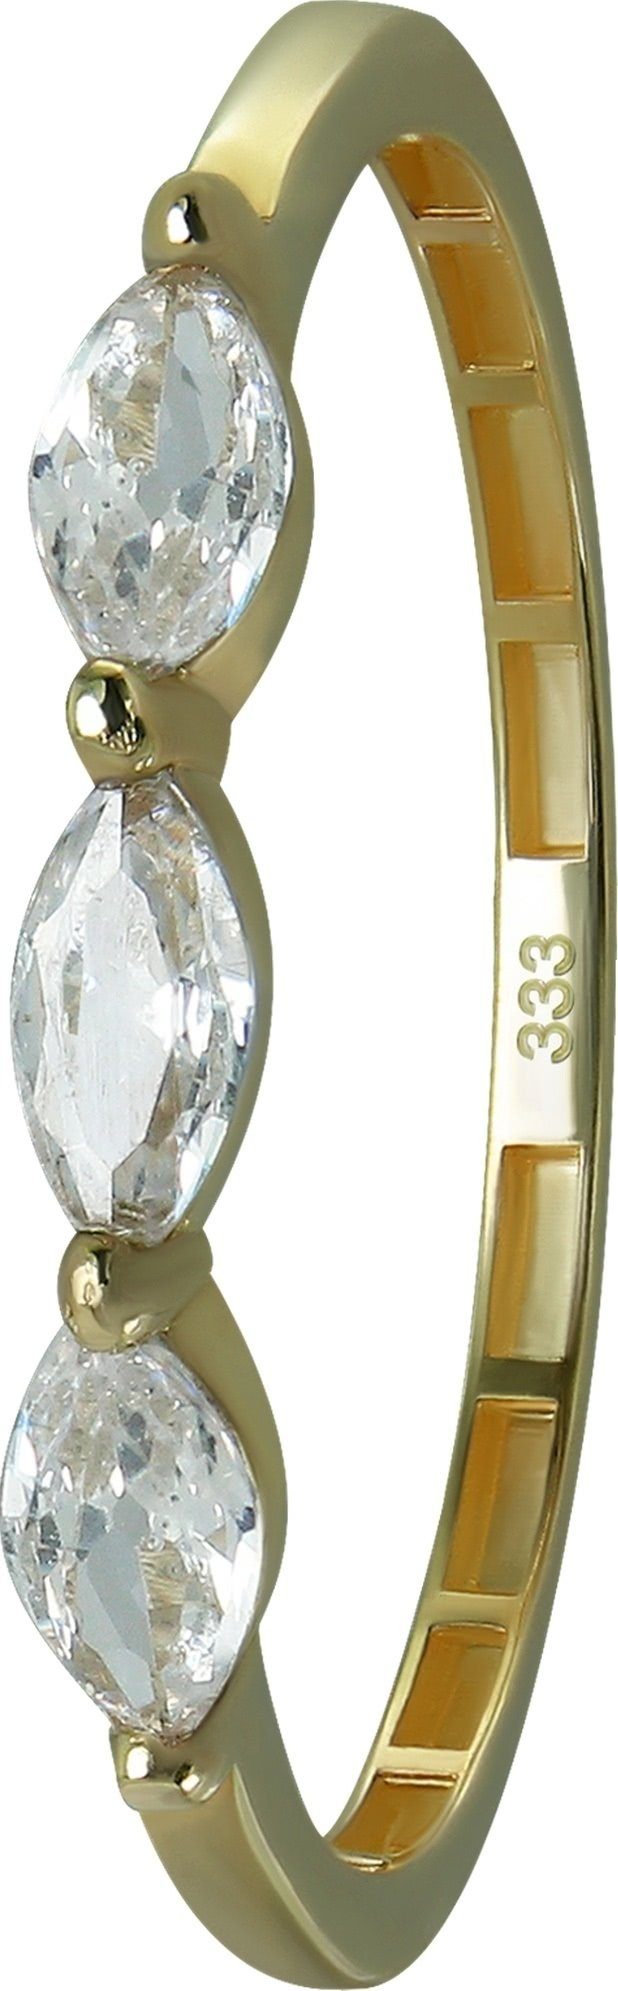 GoldDream Goldring GoldDream Gold Ring Shine Gr.54 Zirkonia (Fingerring), Damen Ring Shine 333 Gelbgold - 8 Karat, Farbe: gold, weiß